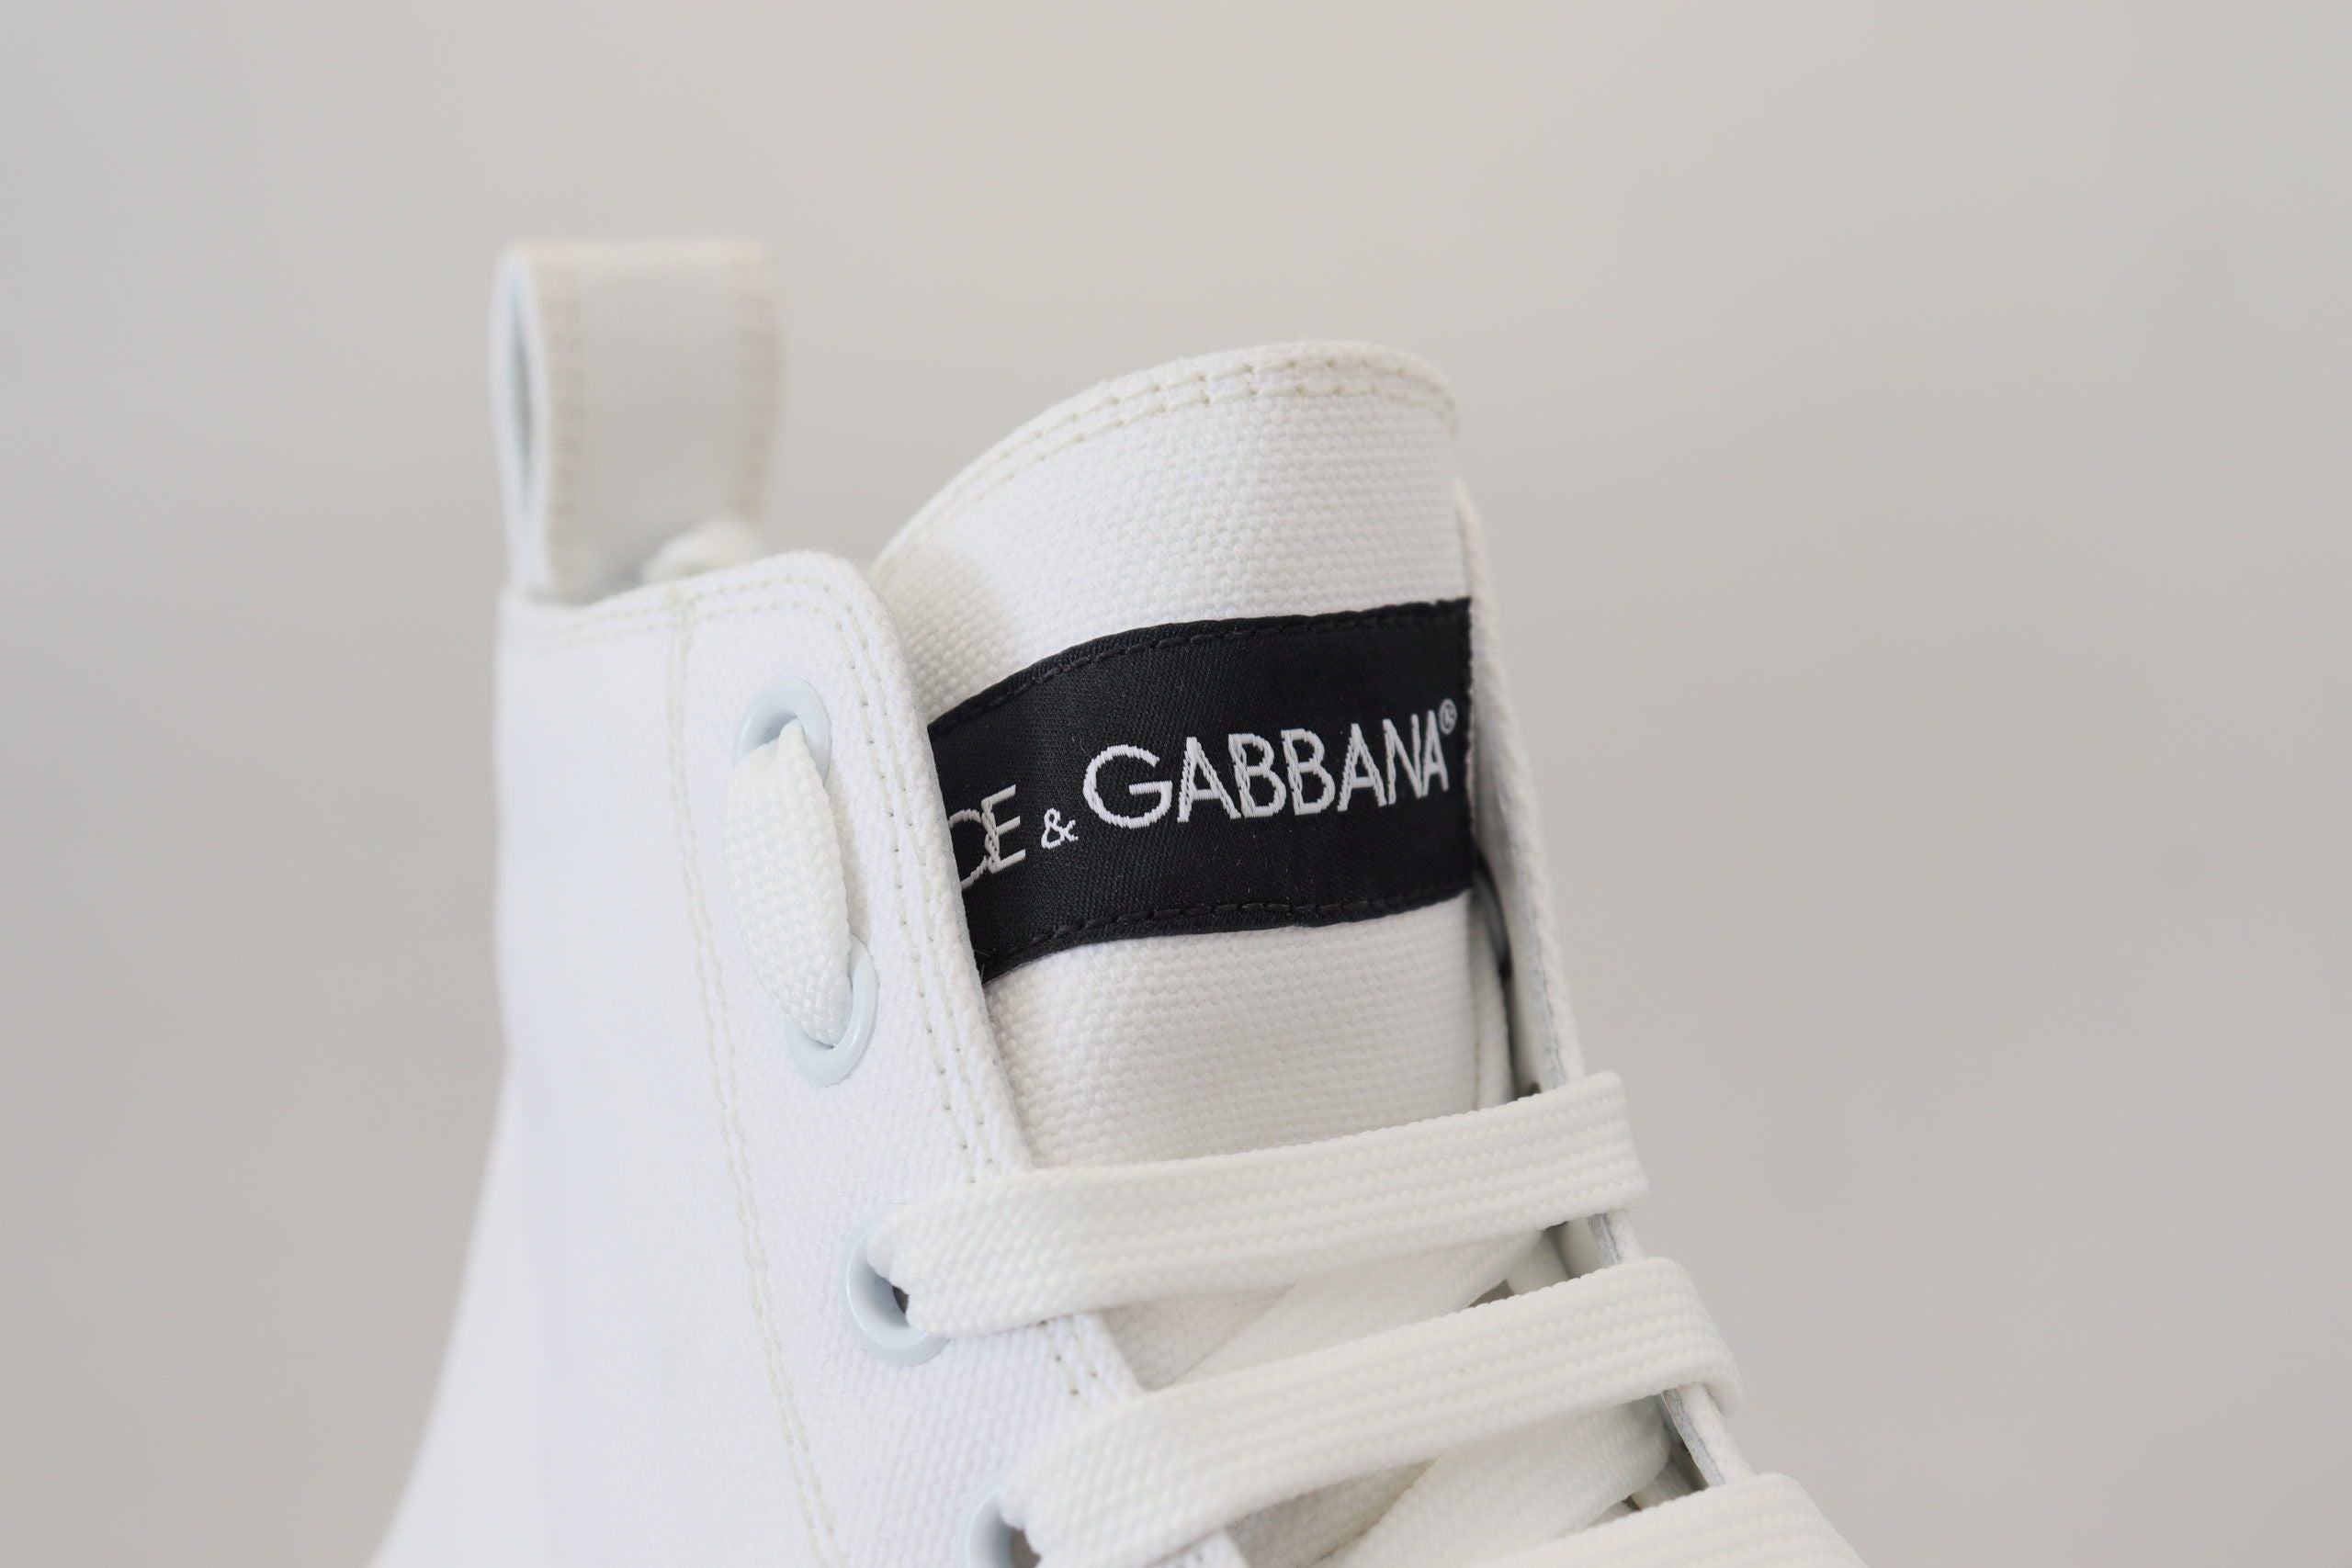 Dolce & Gabbana Elegant High Top Canvas Sneakers